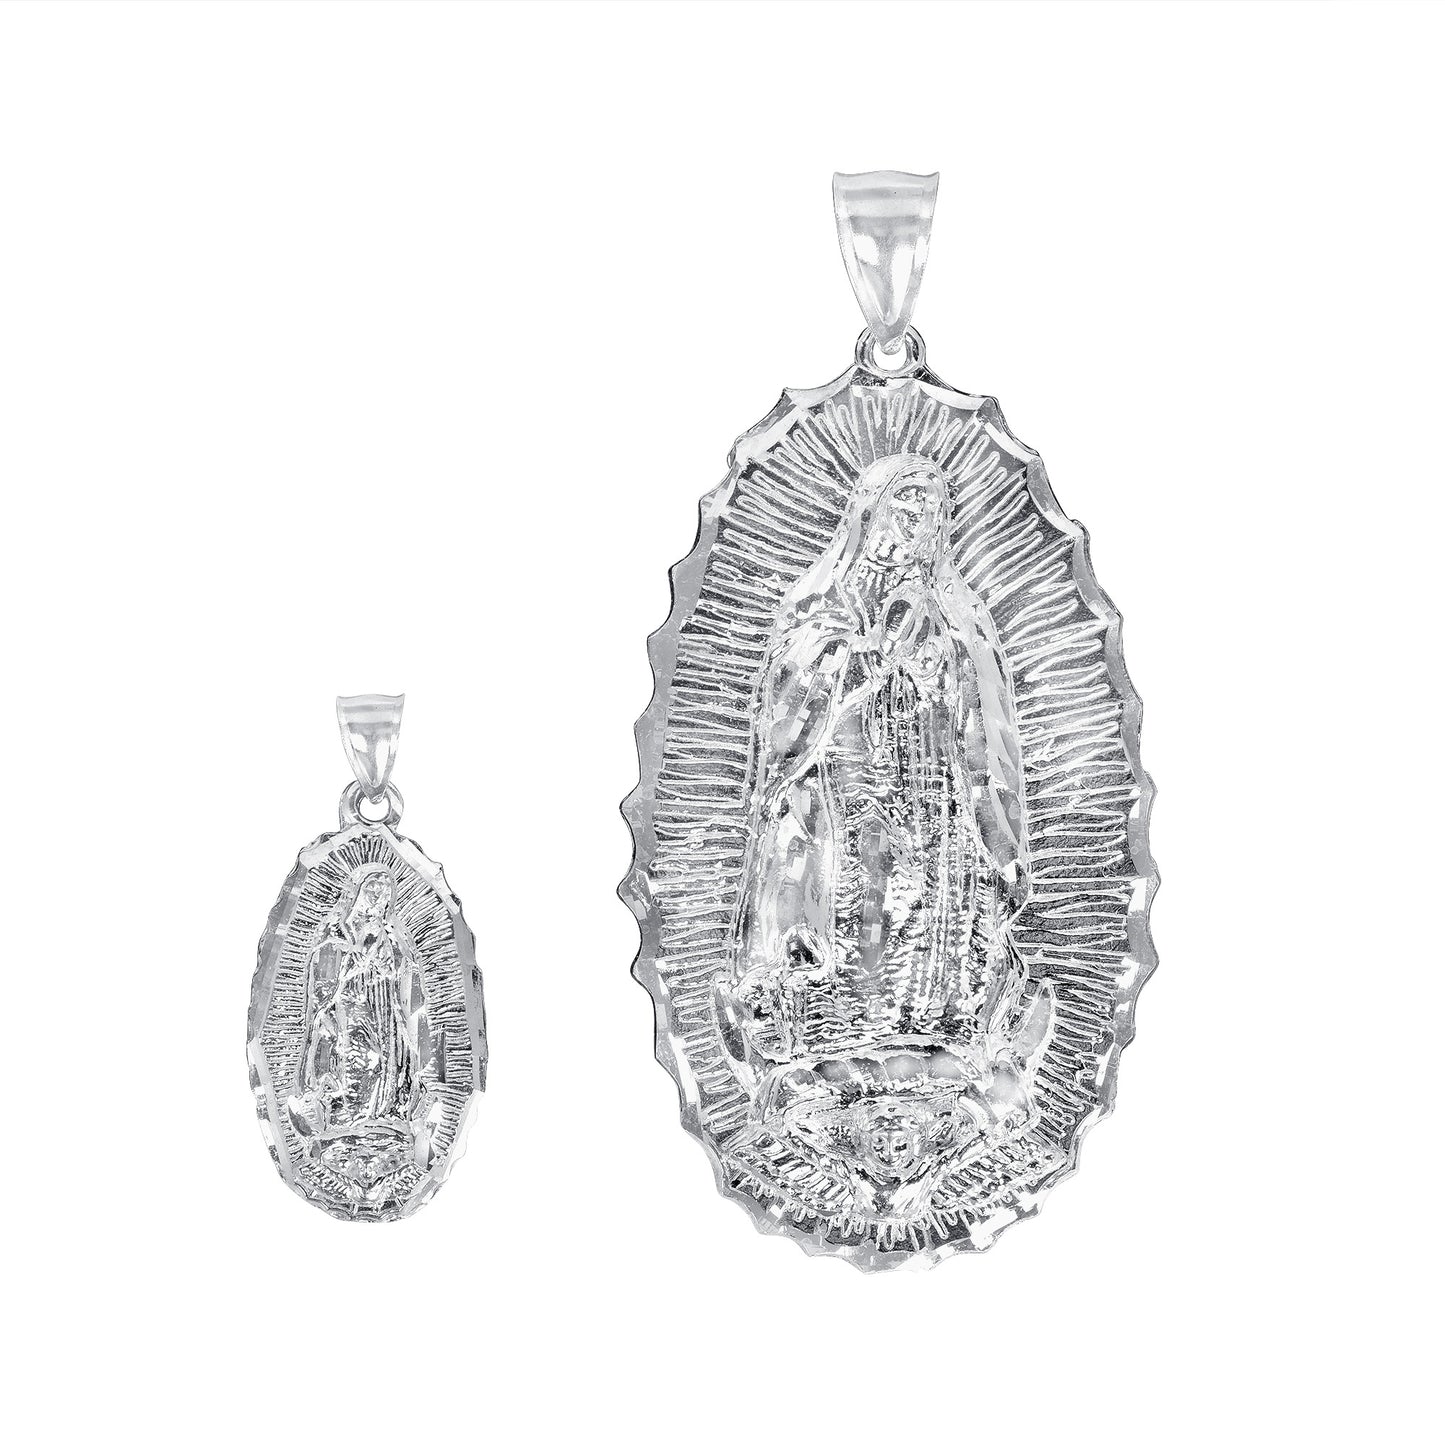 Silver 925 Virgin of Guadalupe Medallion. MEDA48